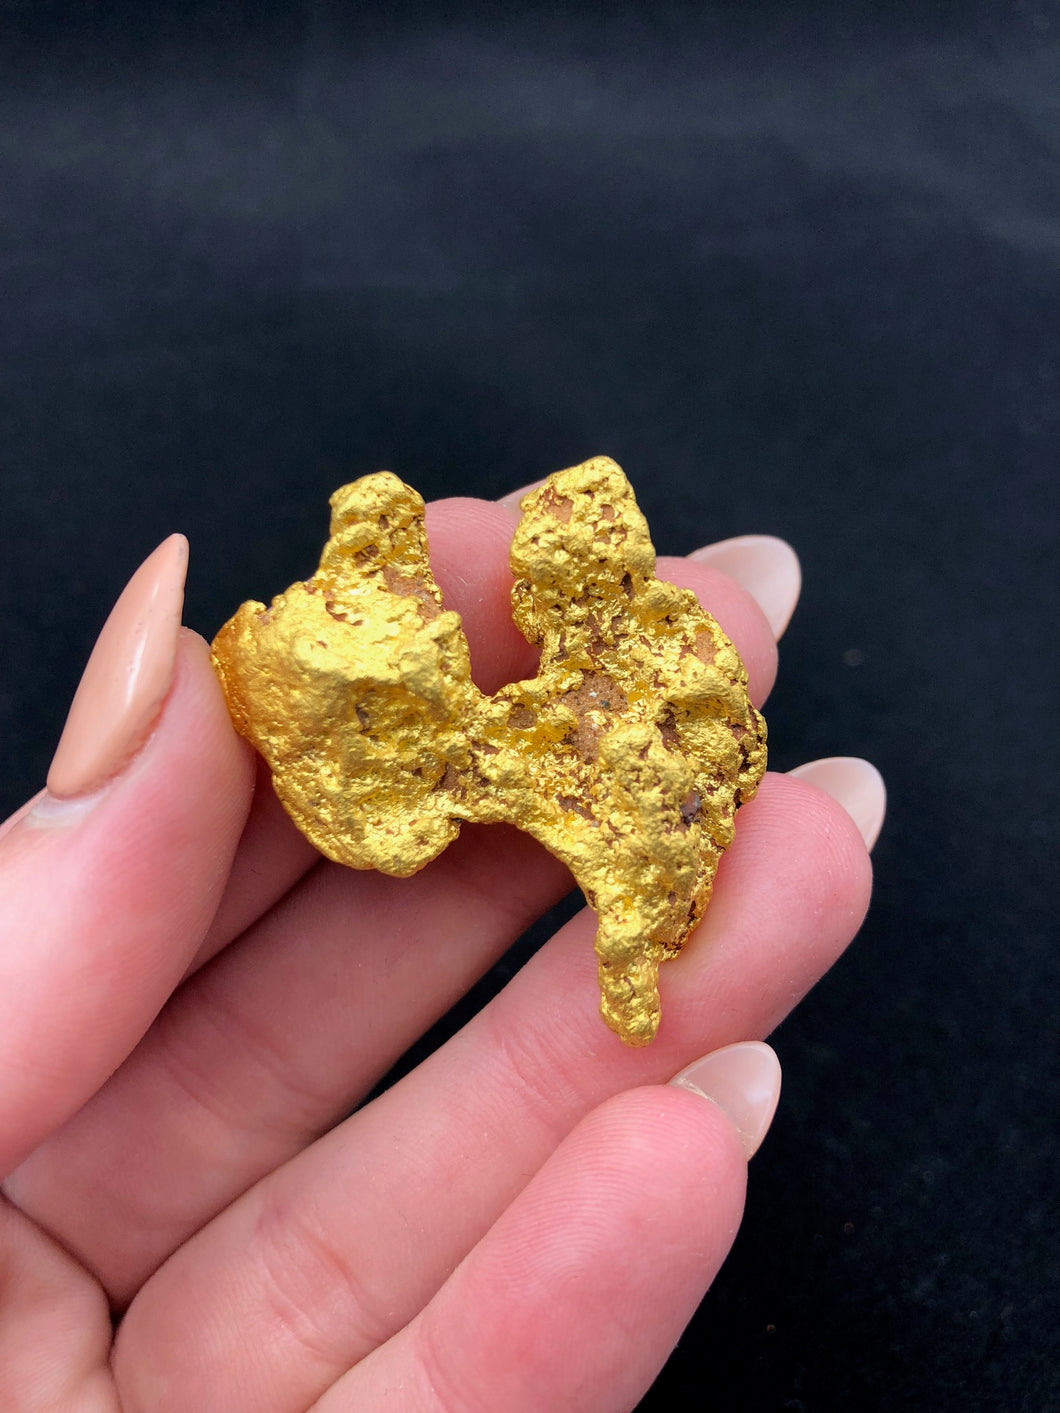 Natural Gold Nugget 44.4 grams